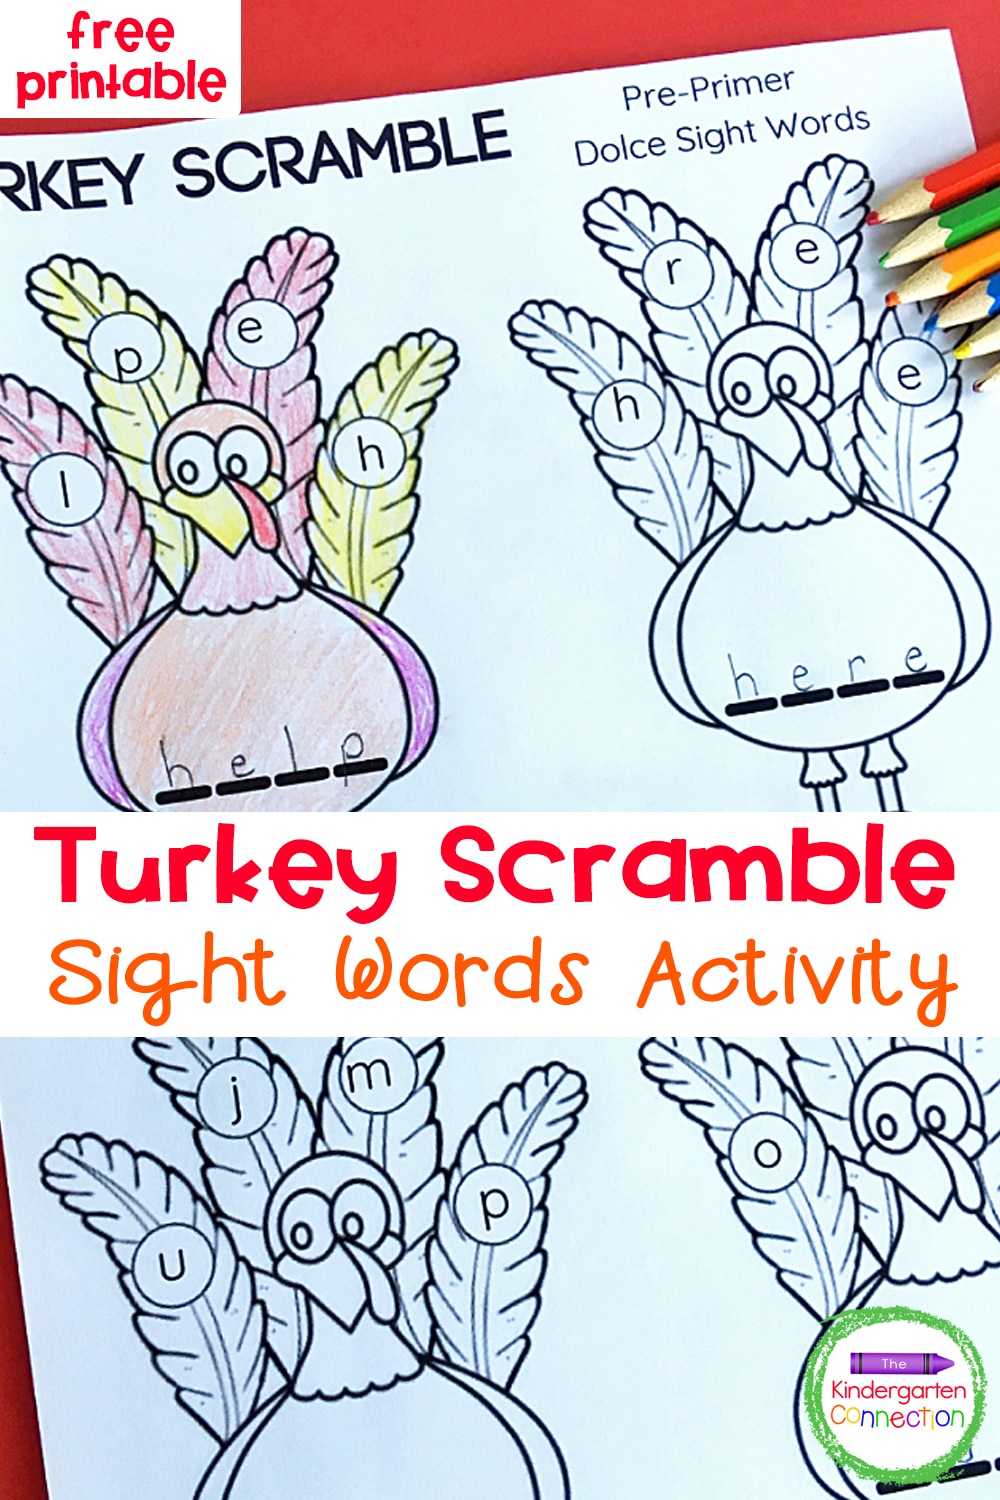 Turkey Scramble Sight Word Activity for Kindergarten!